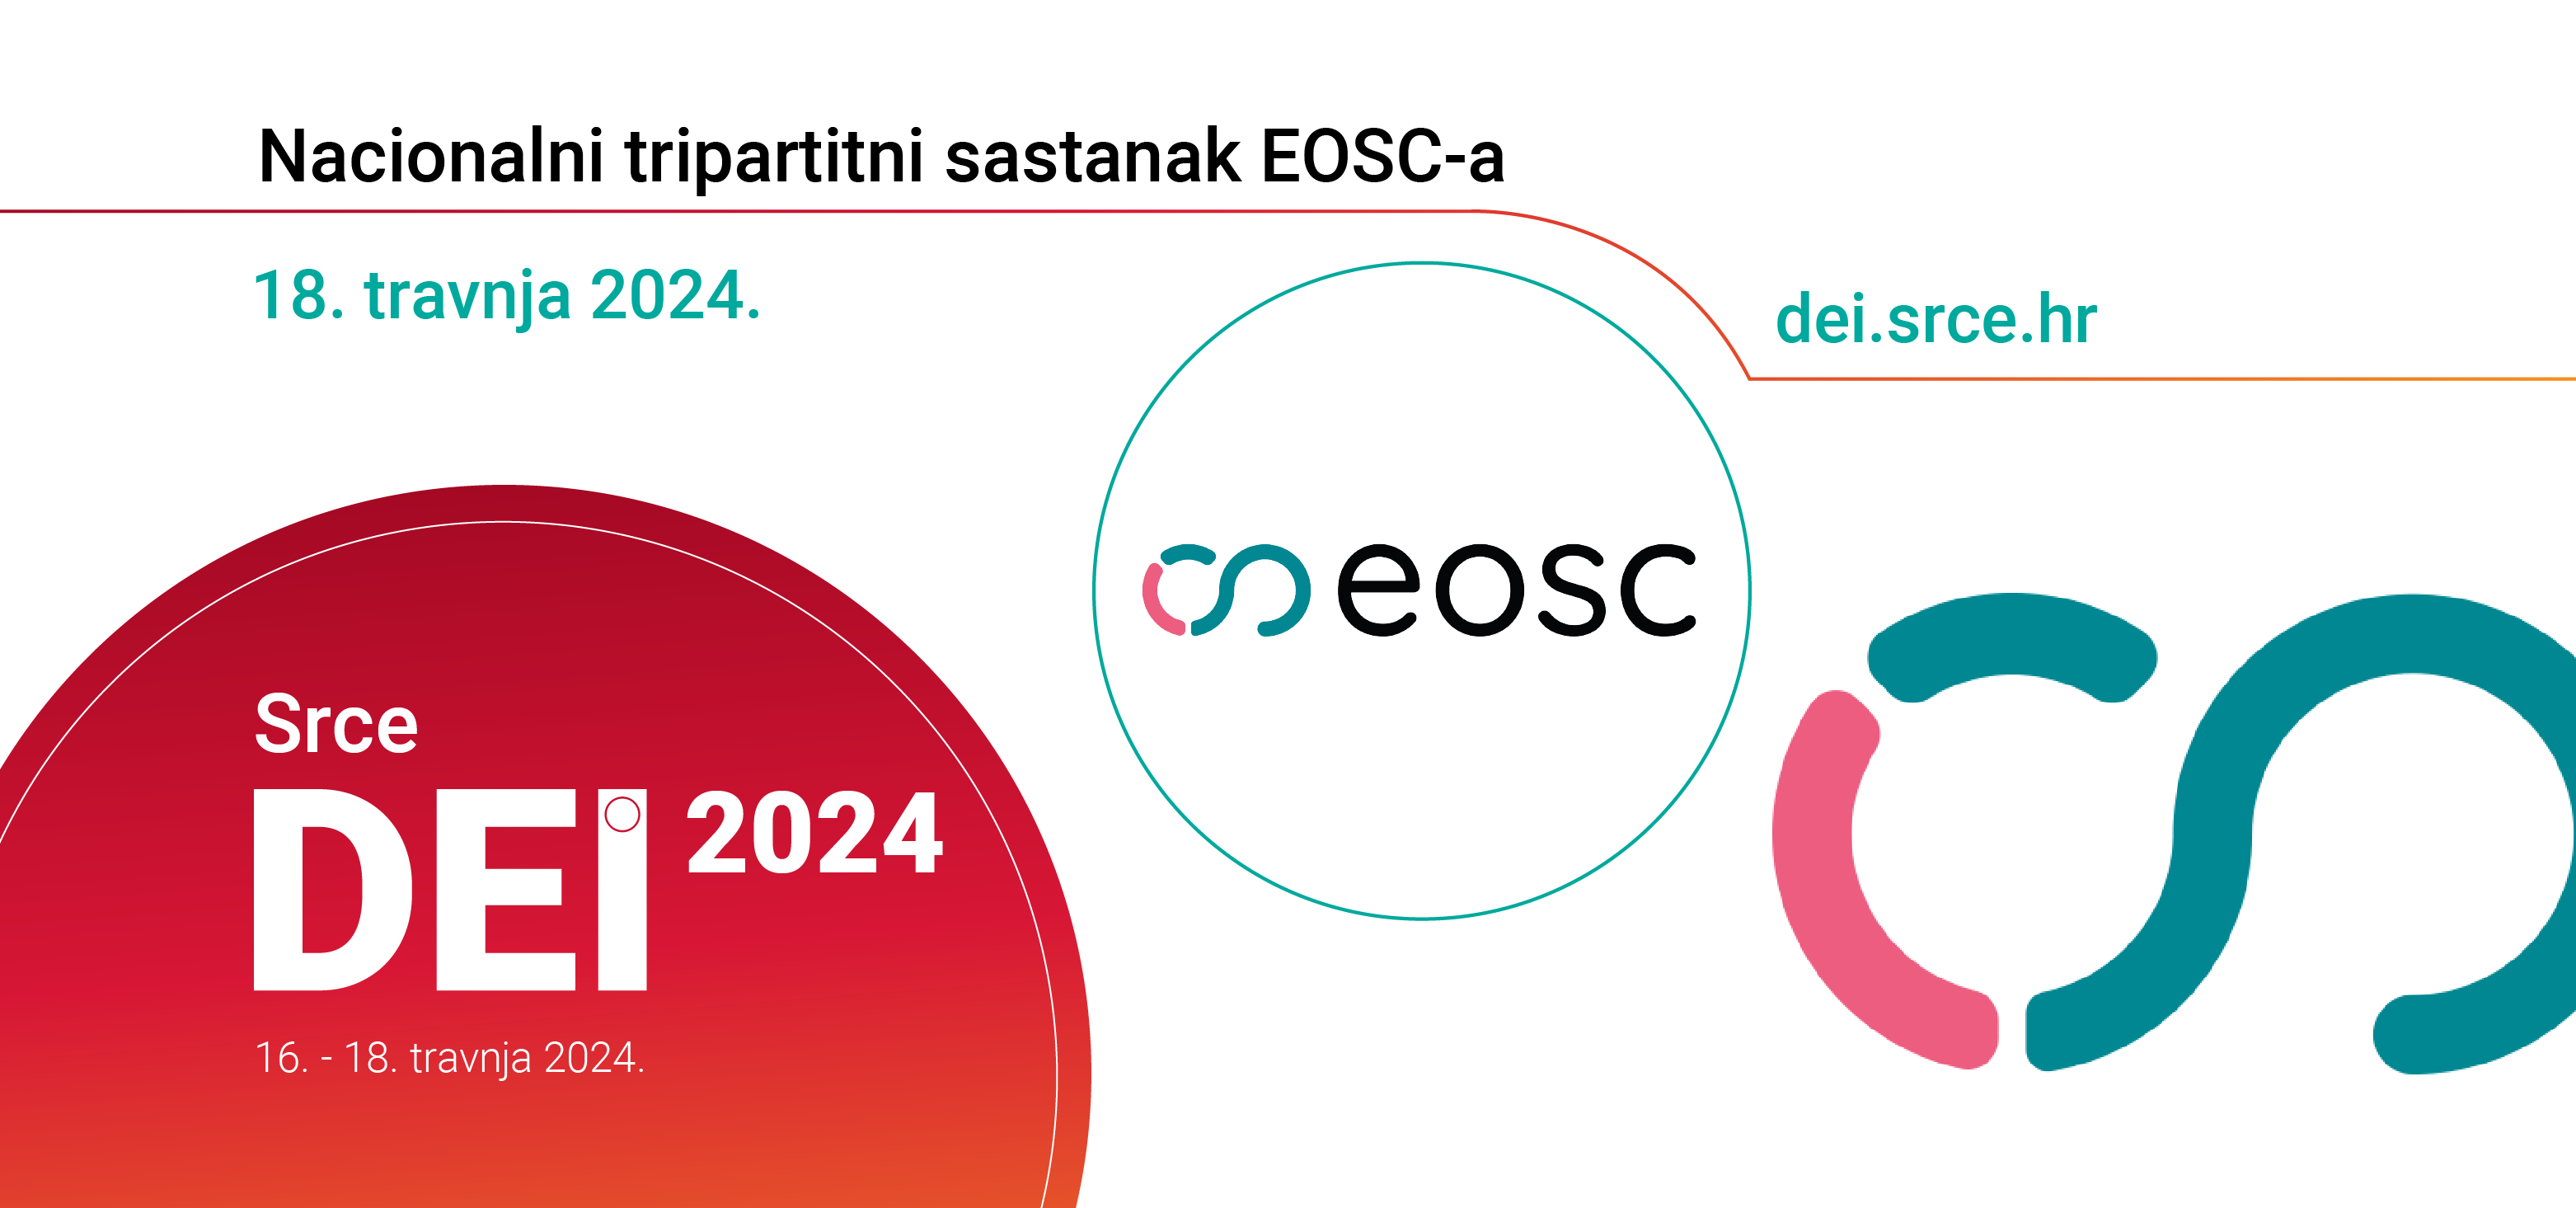 Srce DEI 2024: Second Croatian tripartite meeting of EOSC